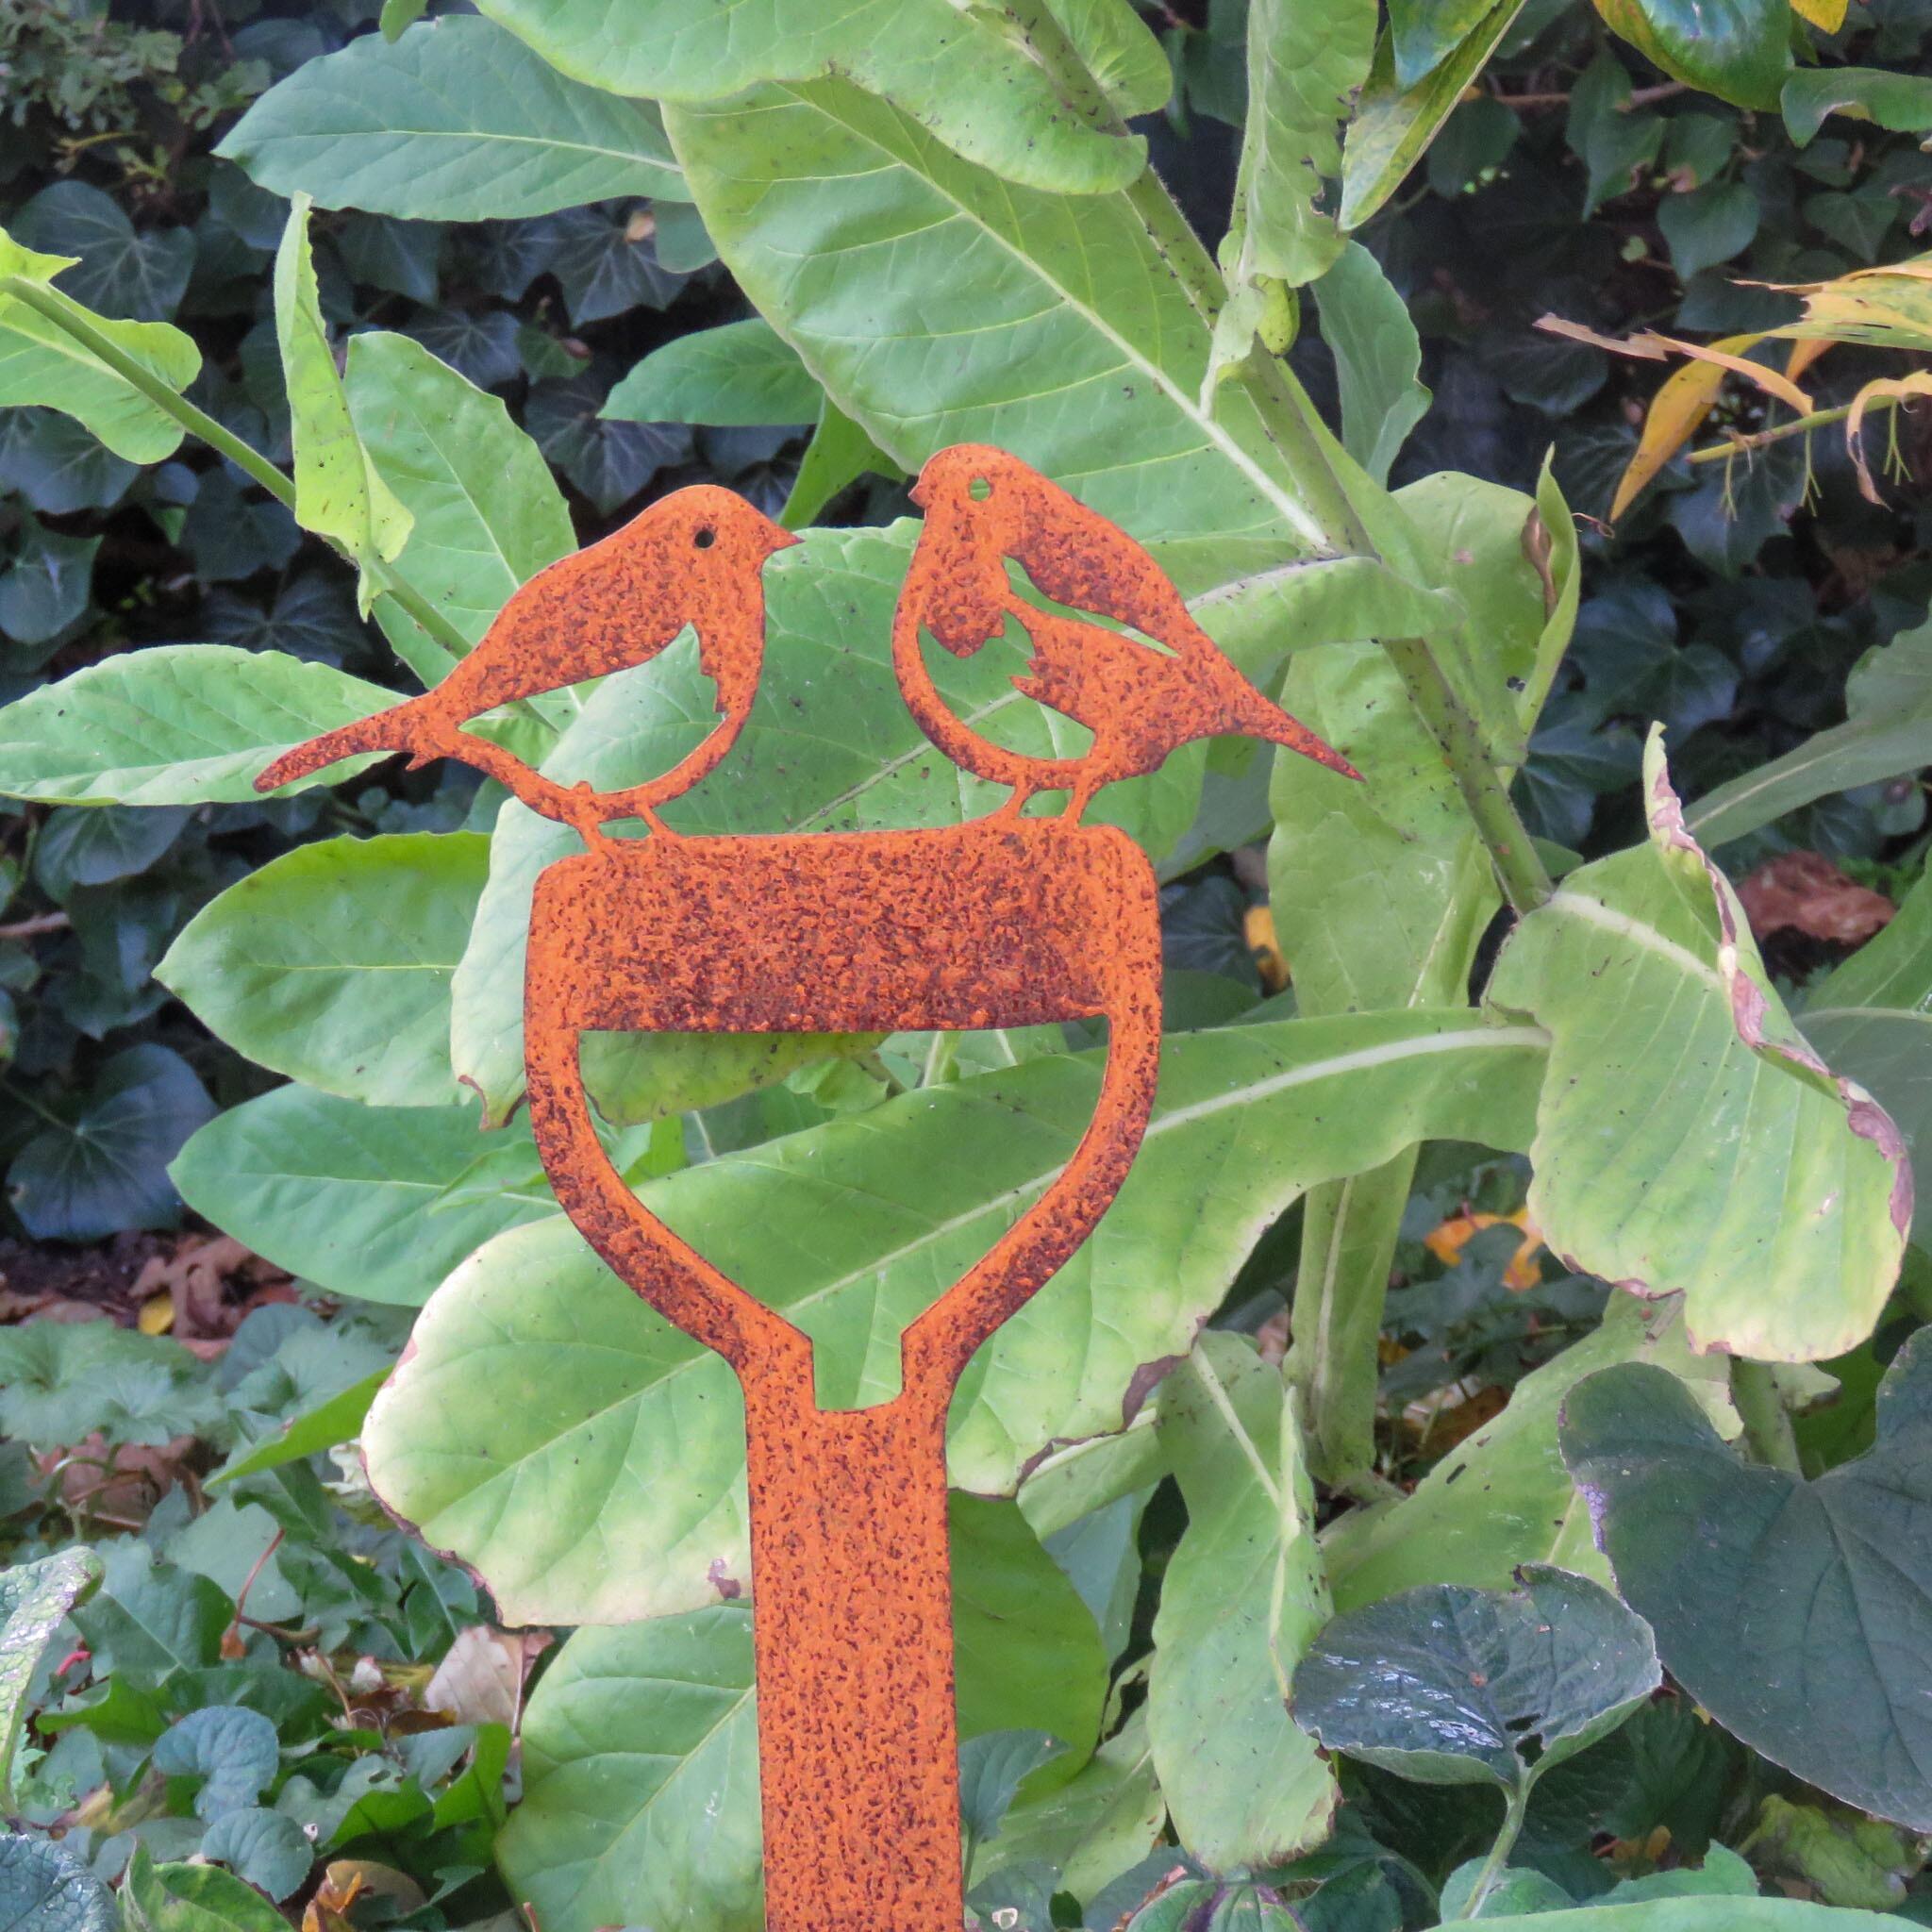 Rusty metal robins on a spade